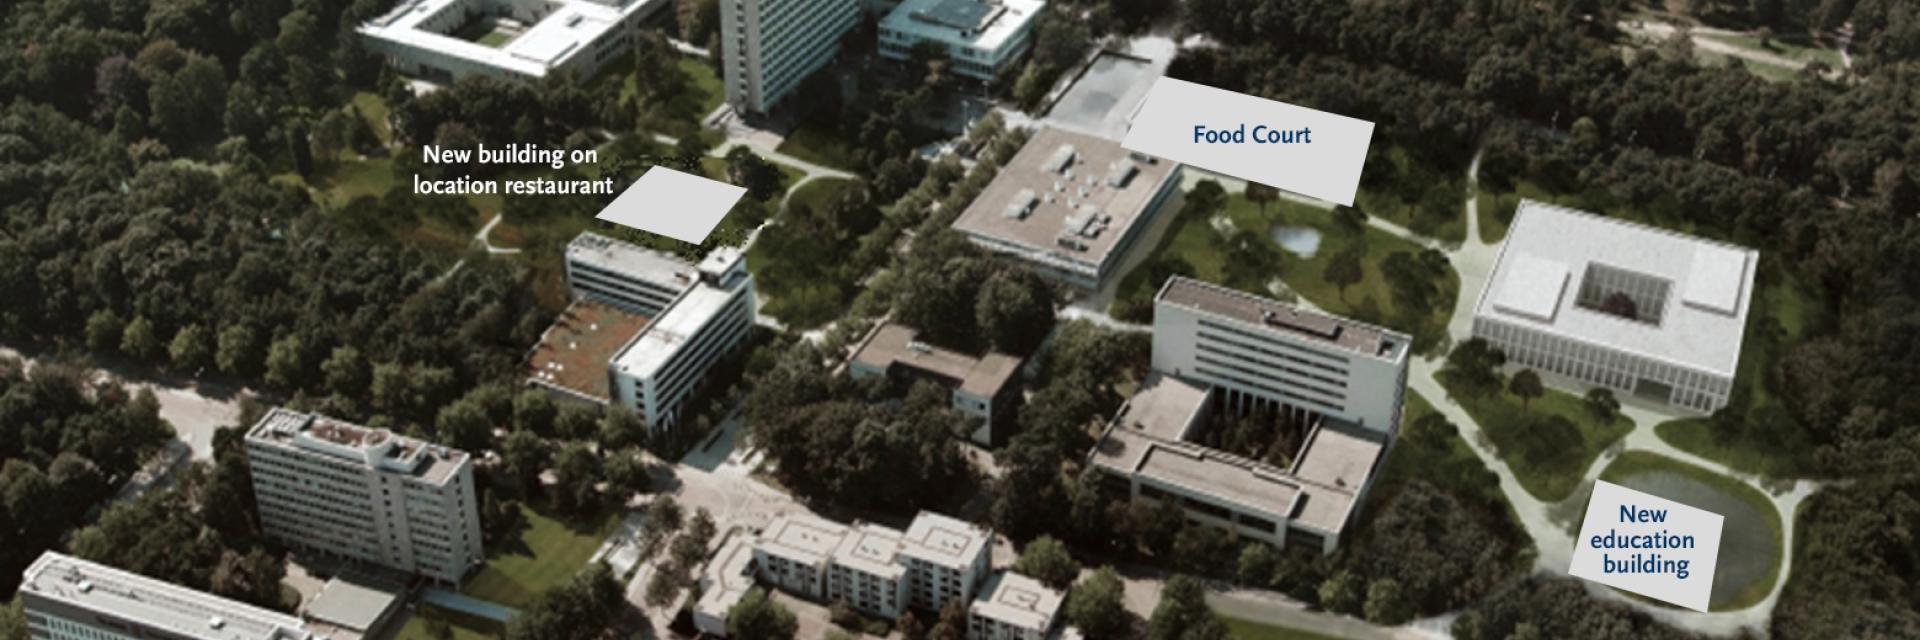 Campus Developments - aerial photo